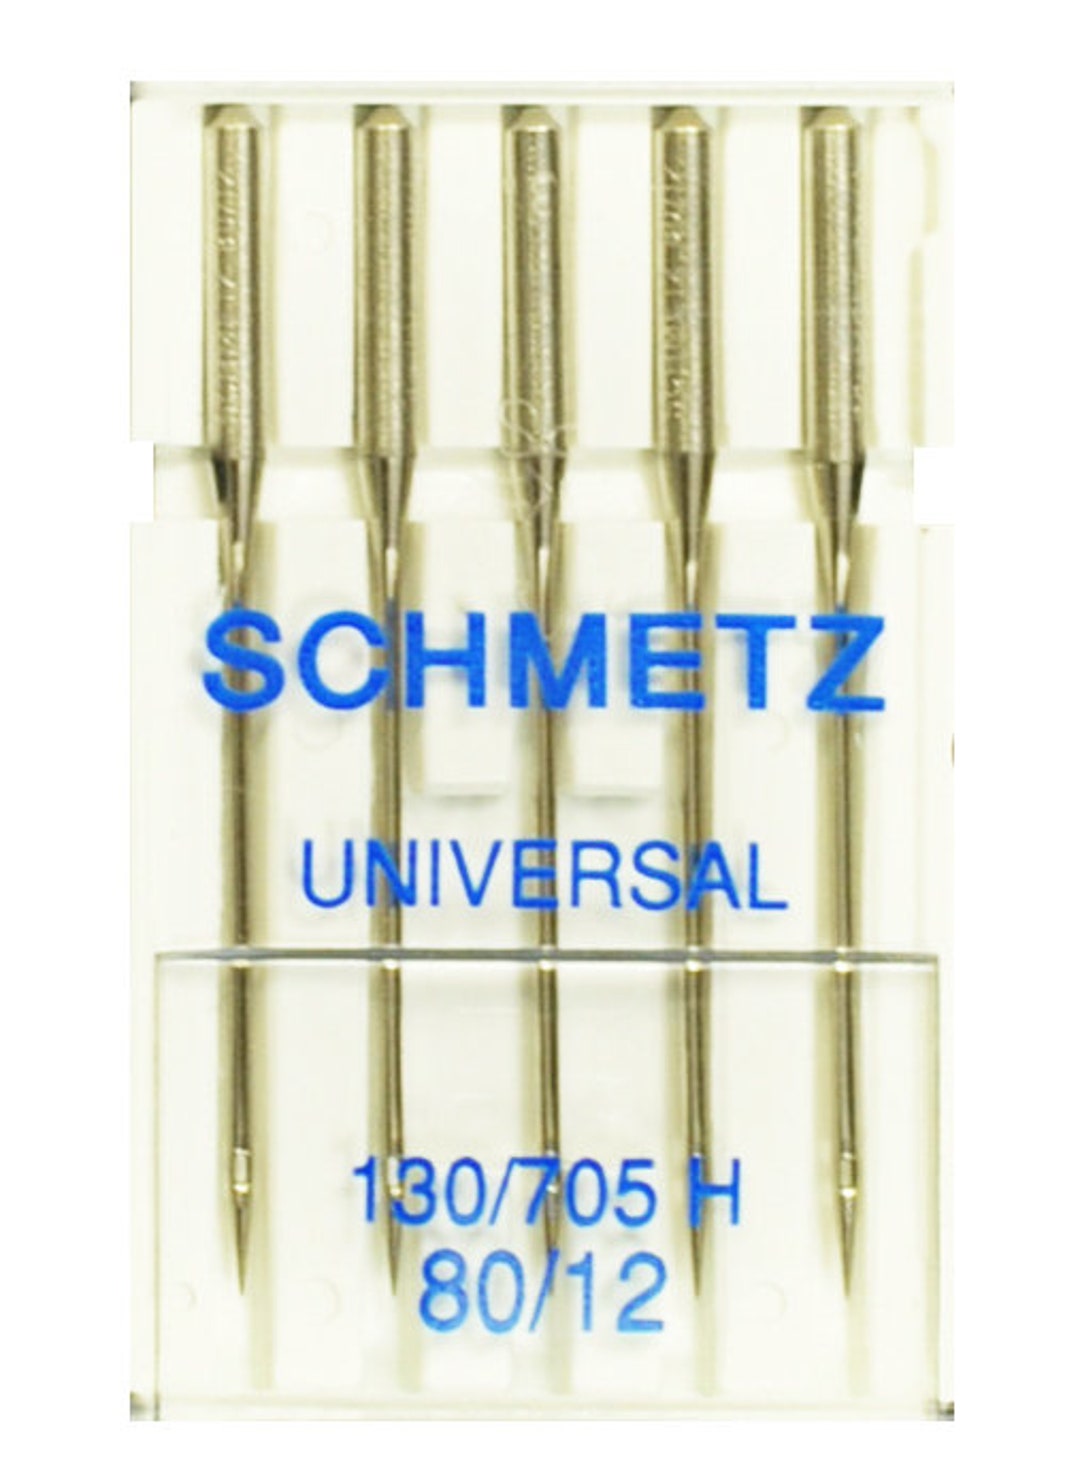 Schmetz Embroidery Machine Needles 5pcs Size 75/11